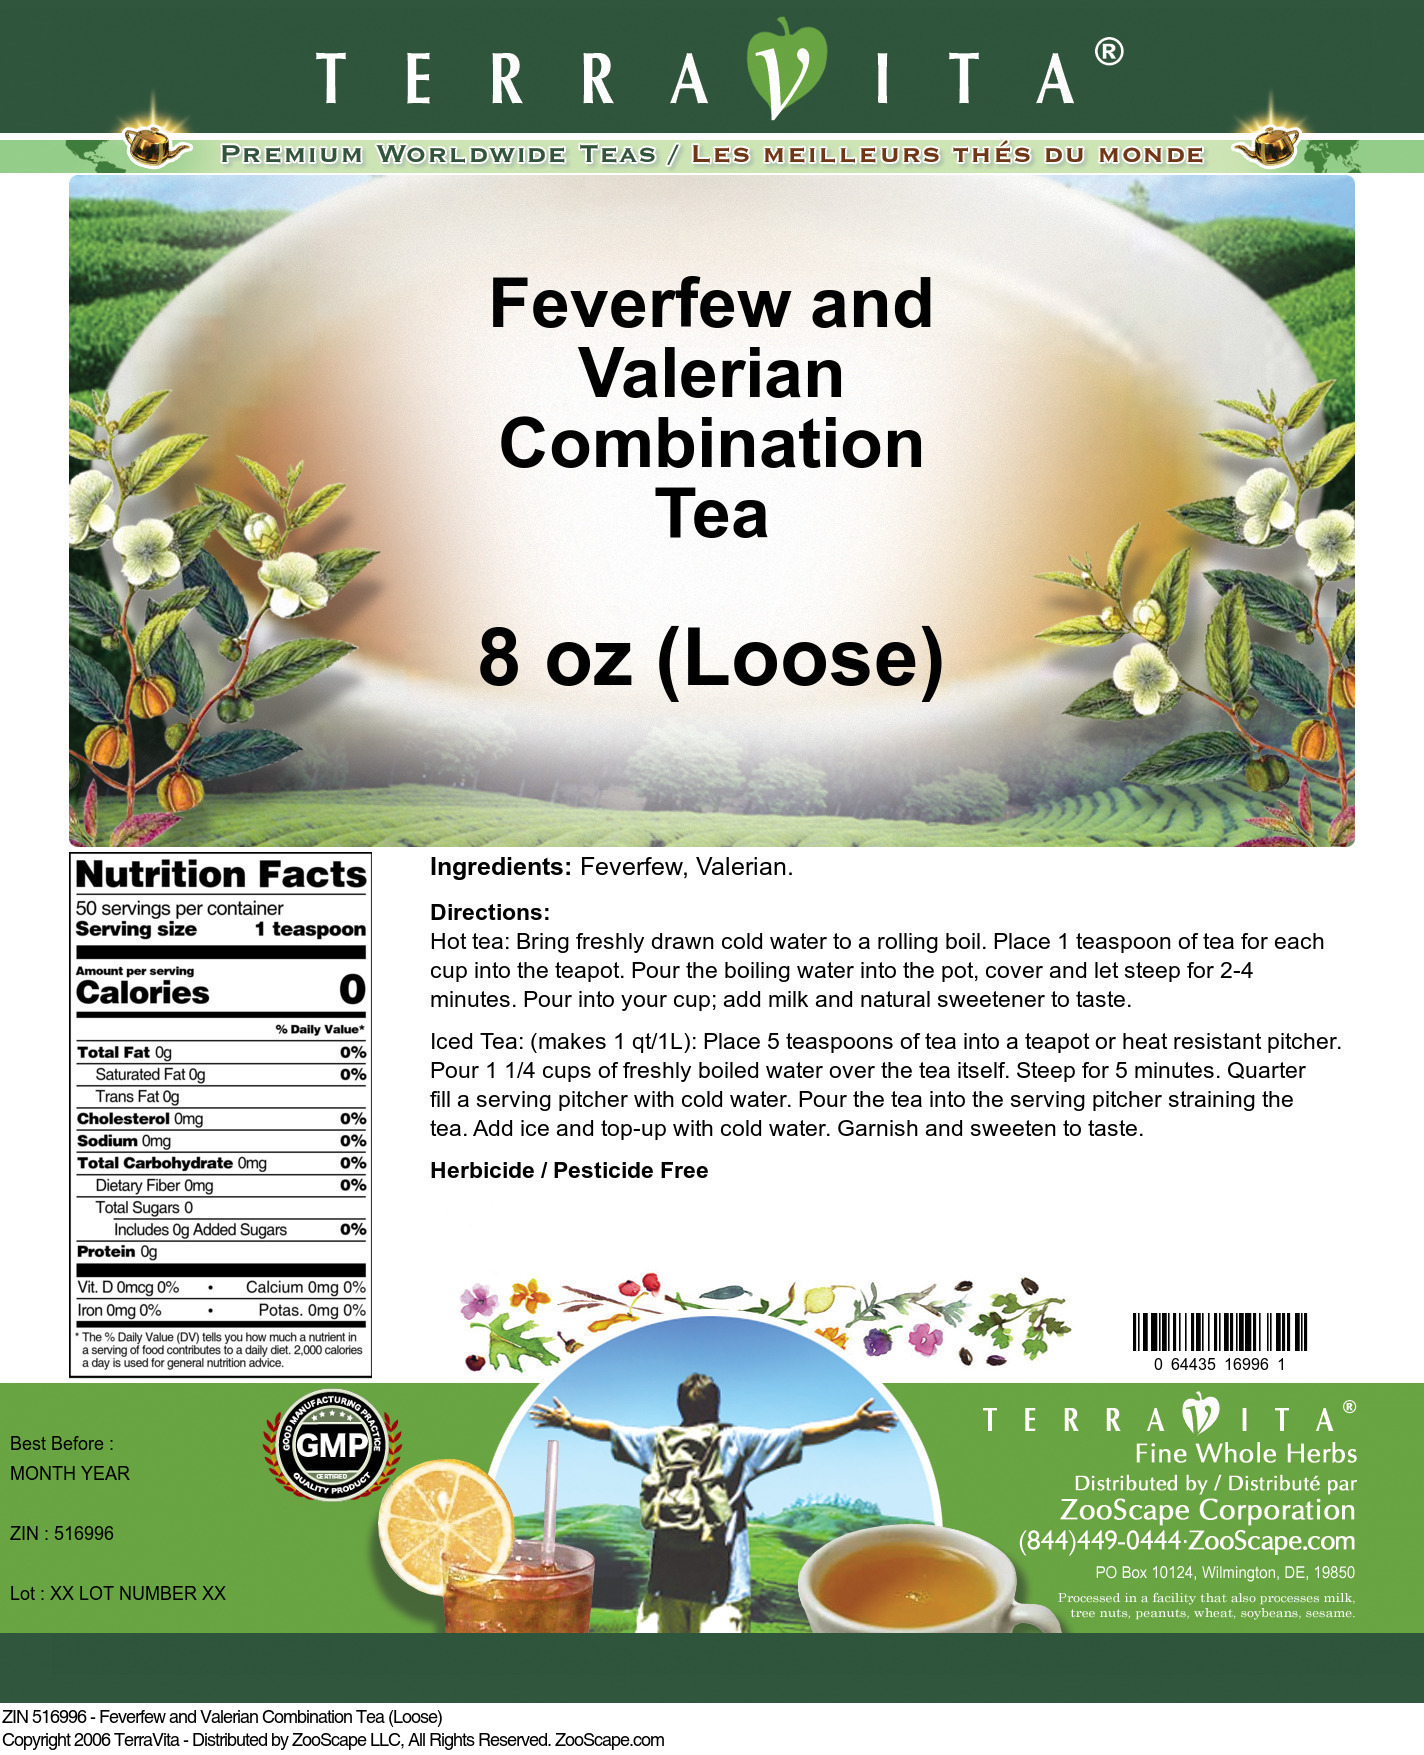 Feverfew and Valerian Combination Tea (Loose) - Label